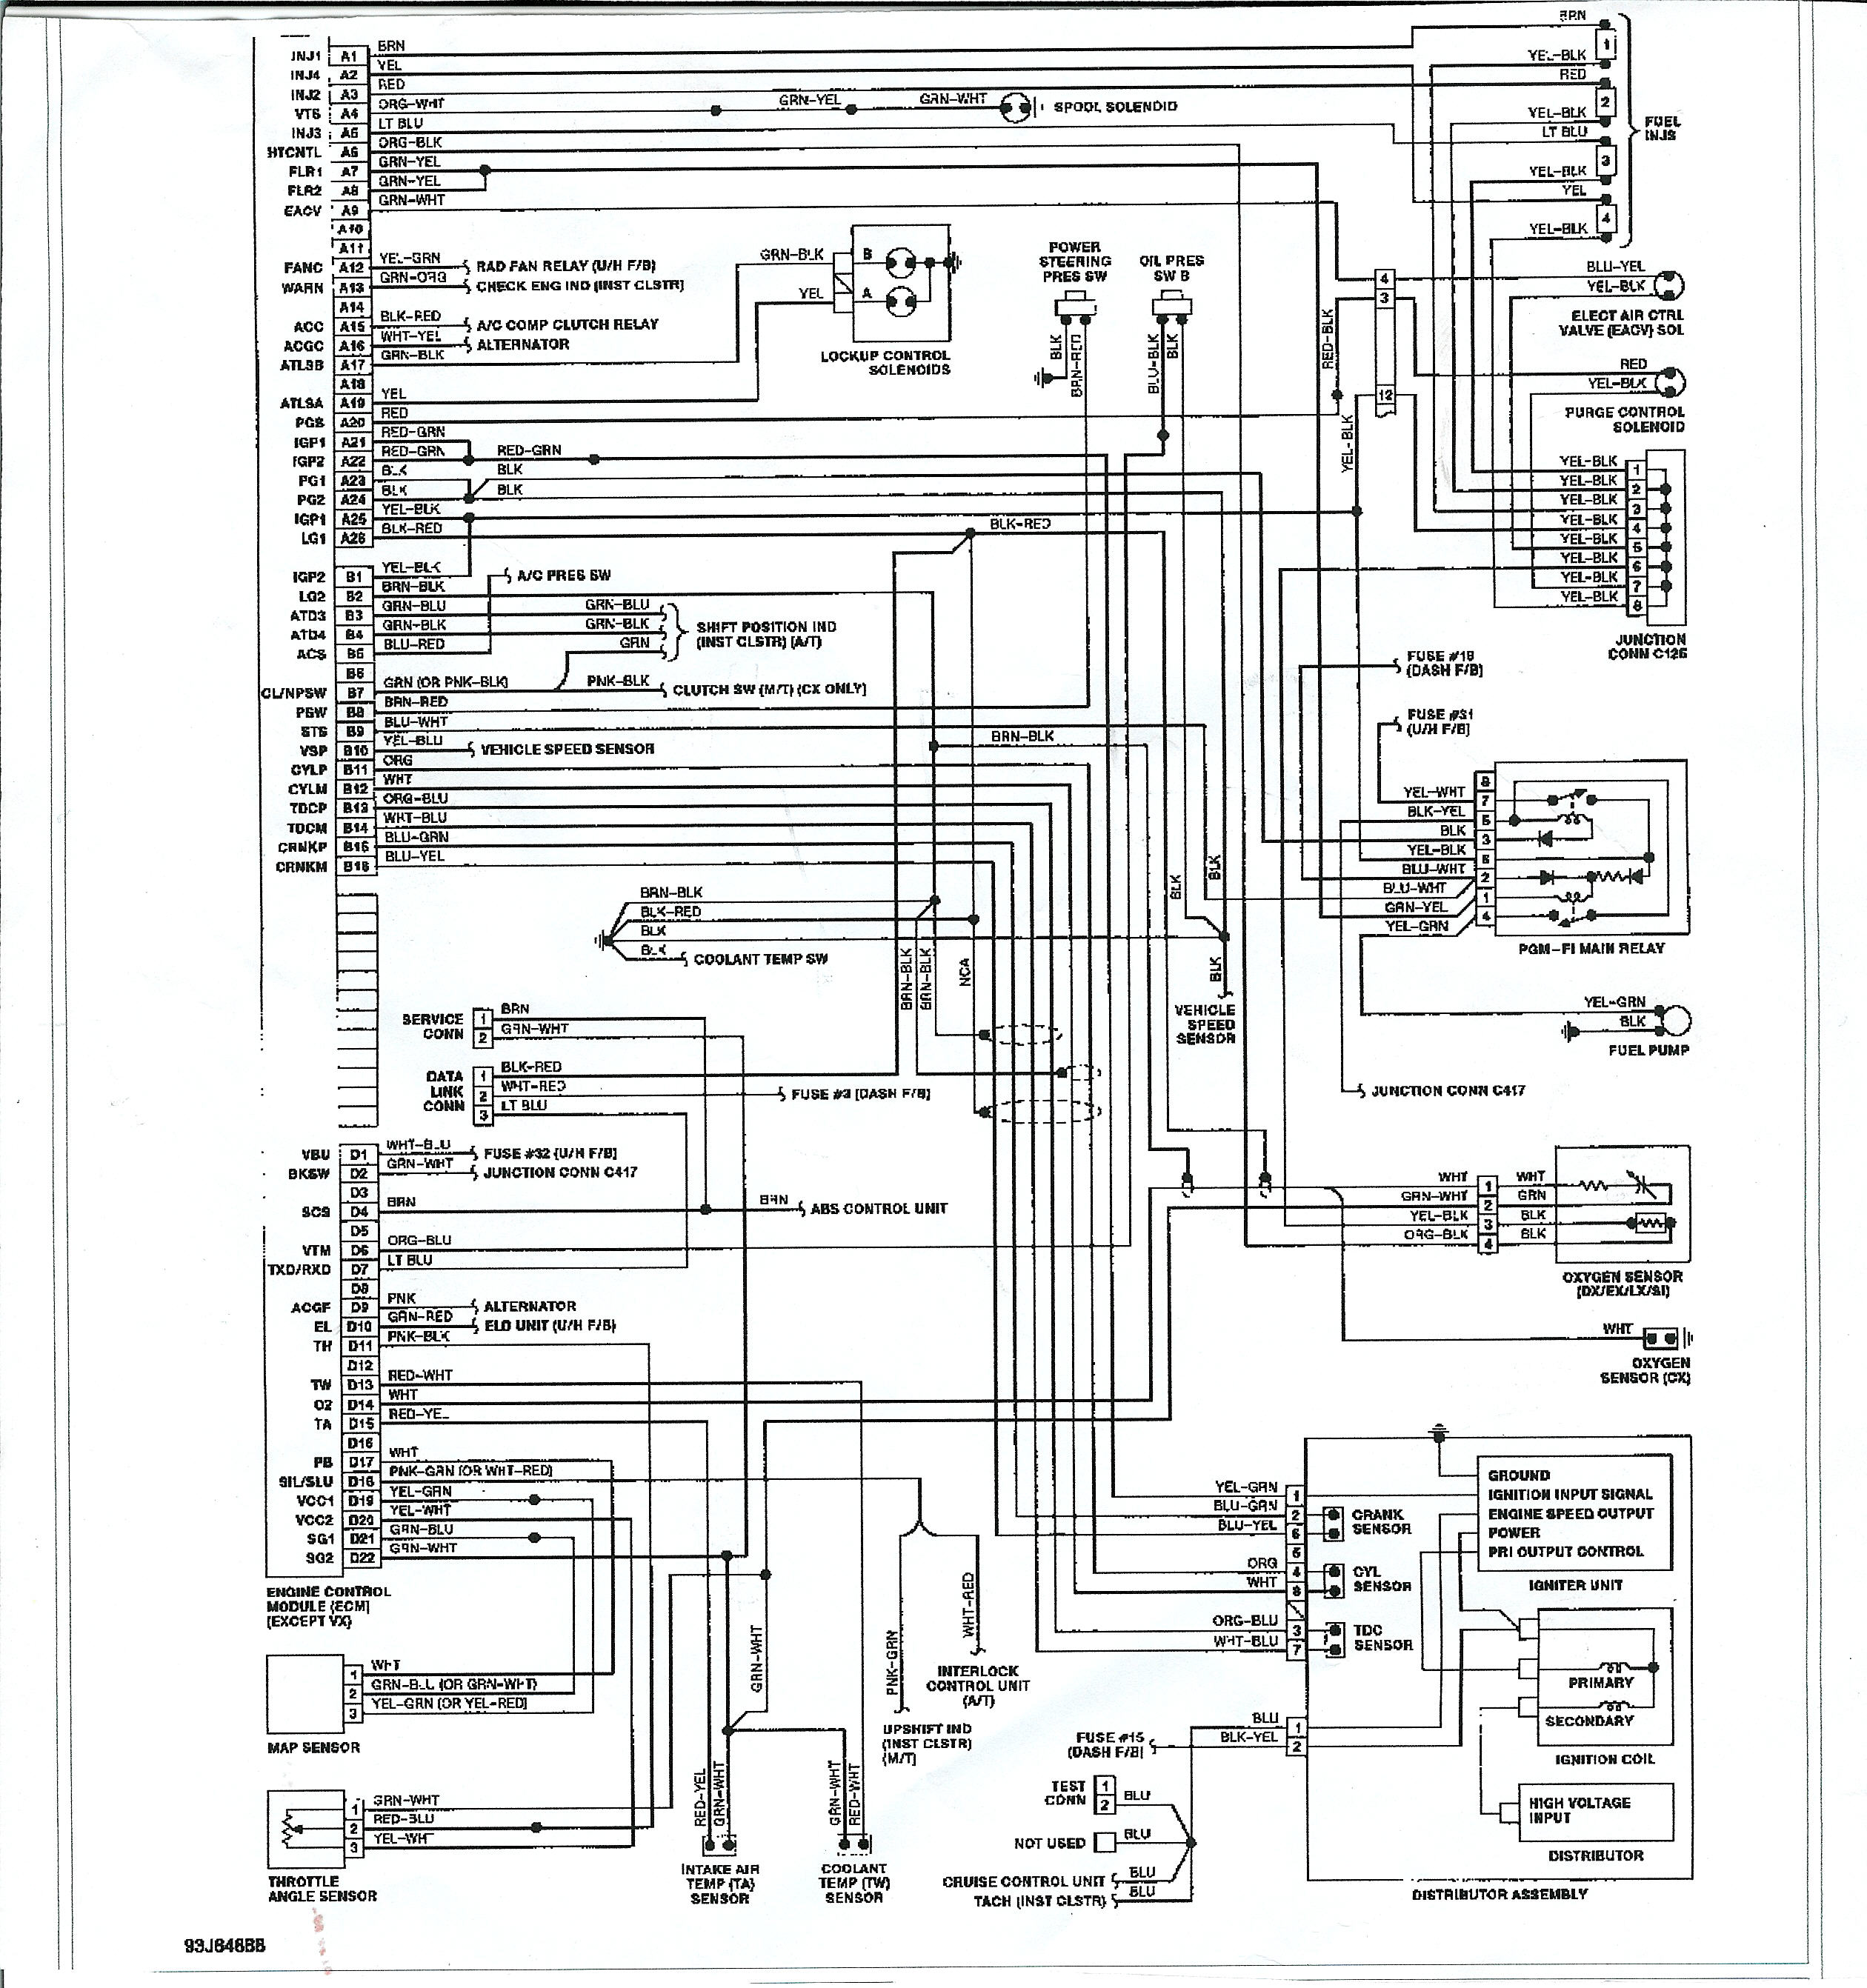 Integra TCM wiring schematic for Auto swap... - Honda-Tech